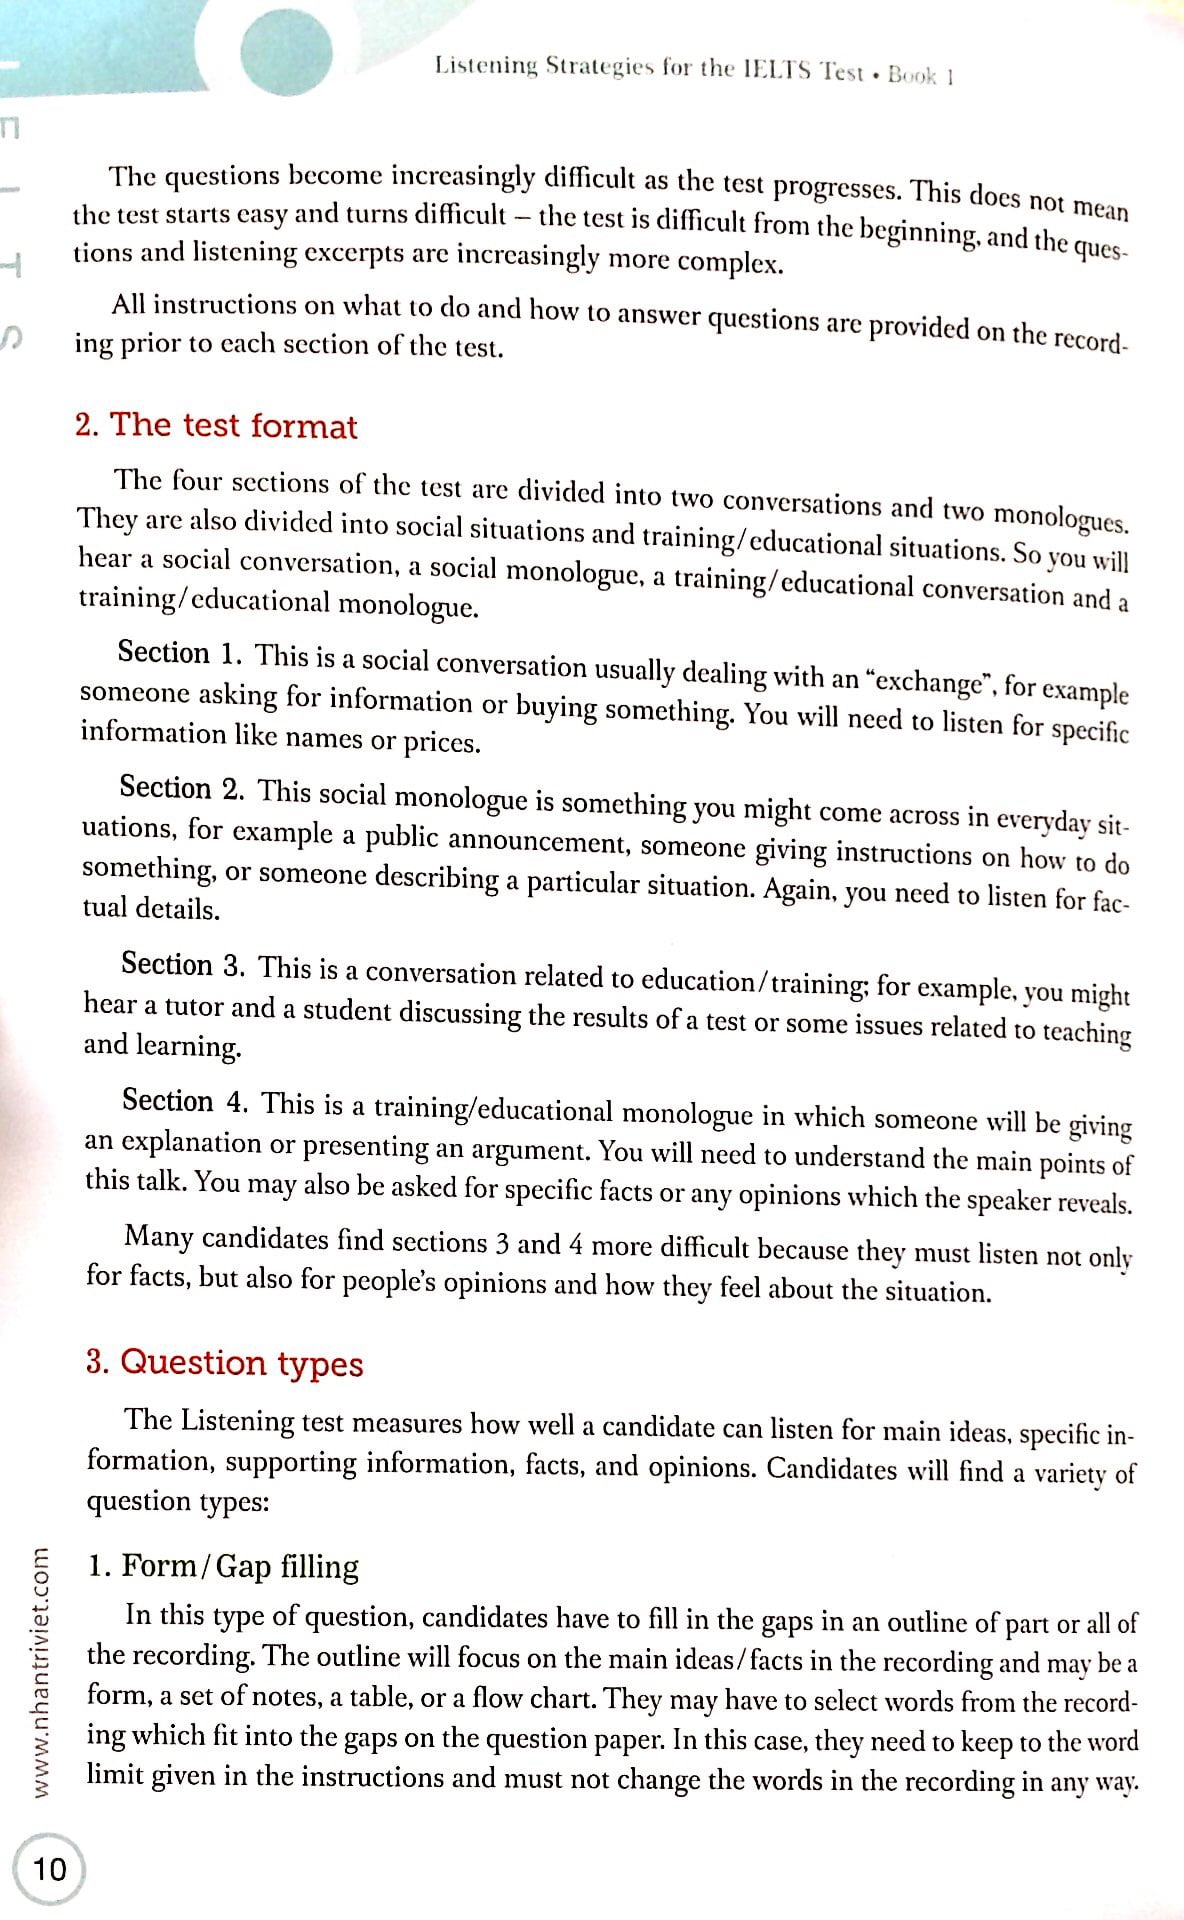 Listening Strategies For The IELTS Test - Book 1 PDF